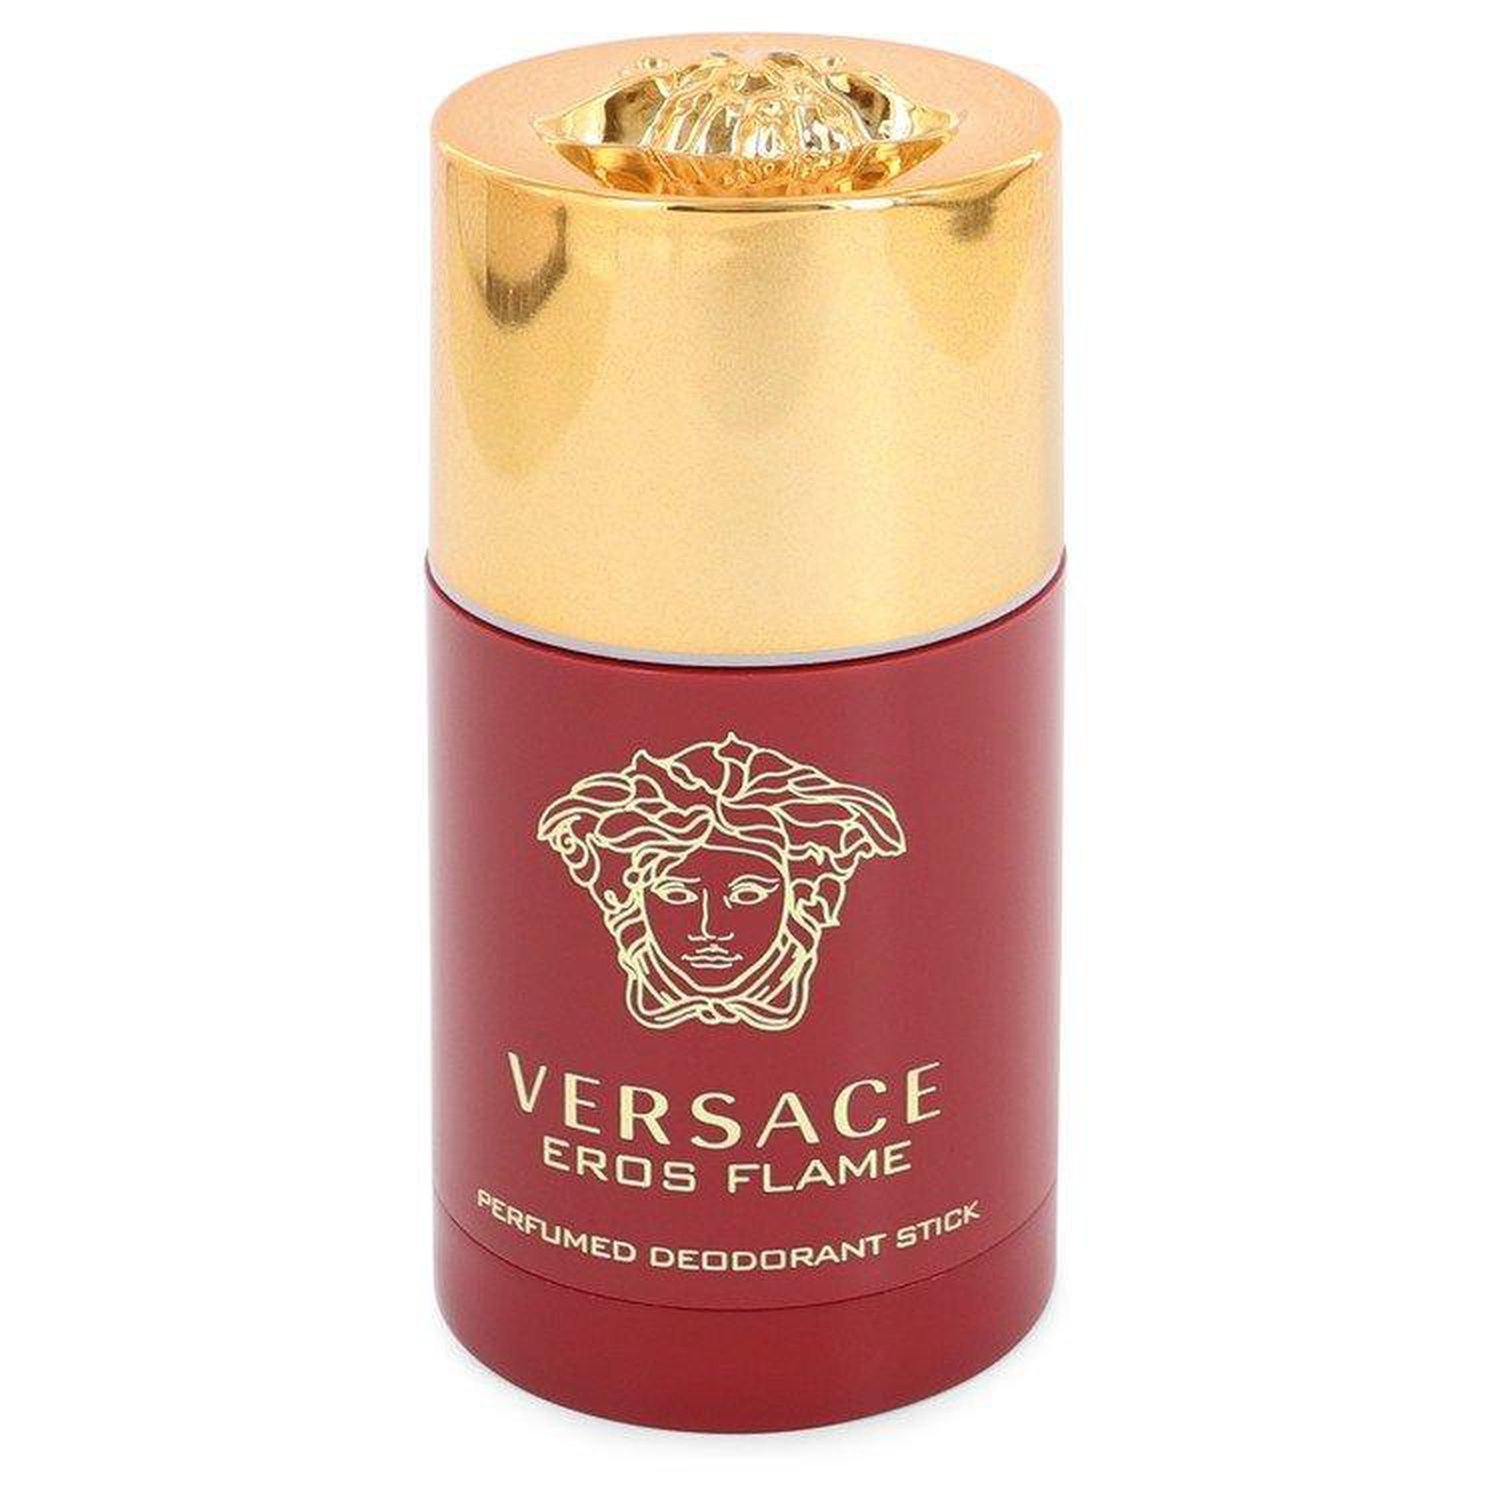 Versace Eros Flame by Versace Deodorant Stick (Men) 2.5 oz